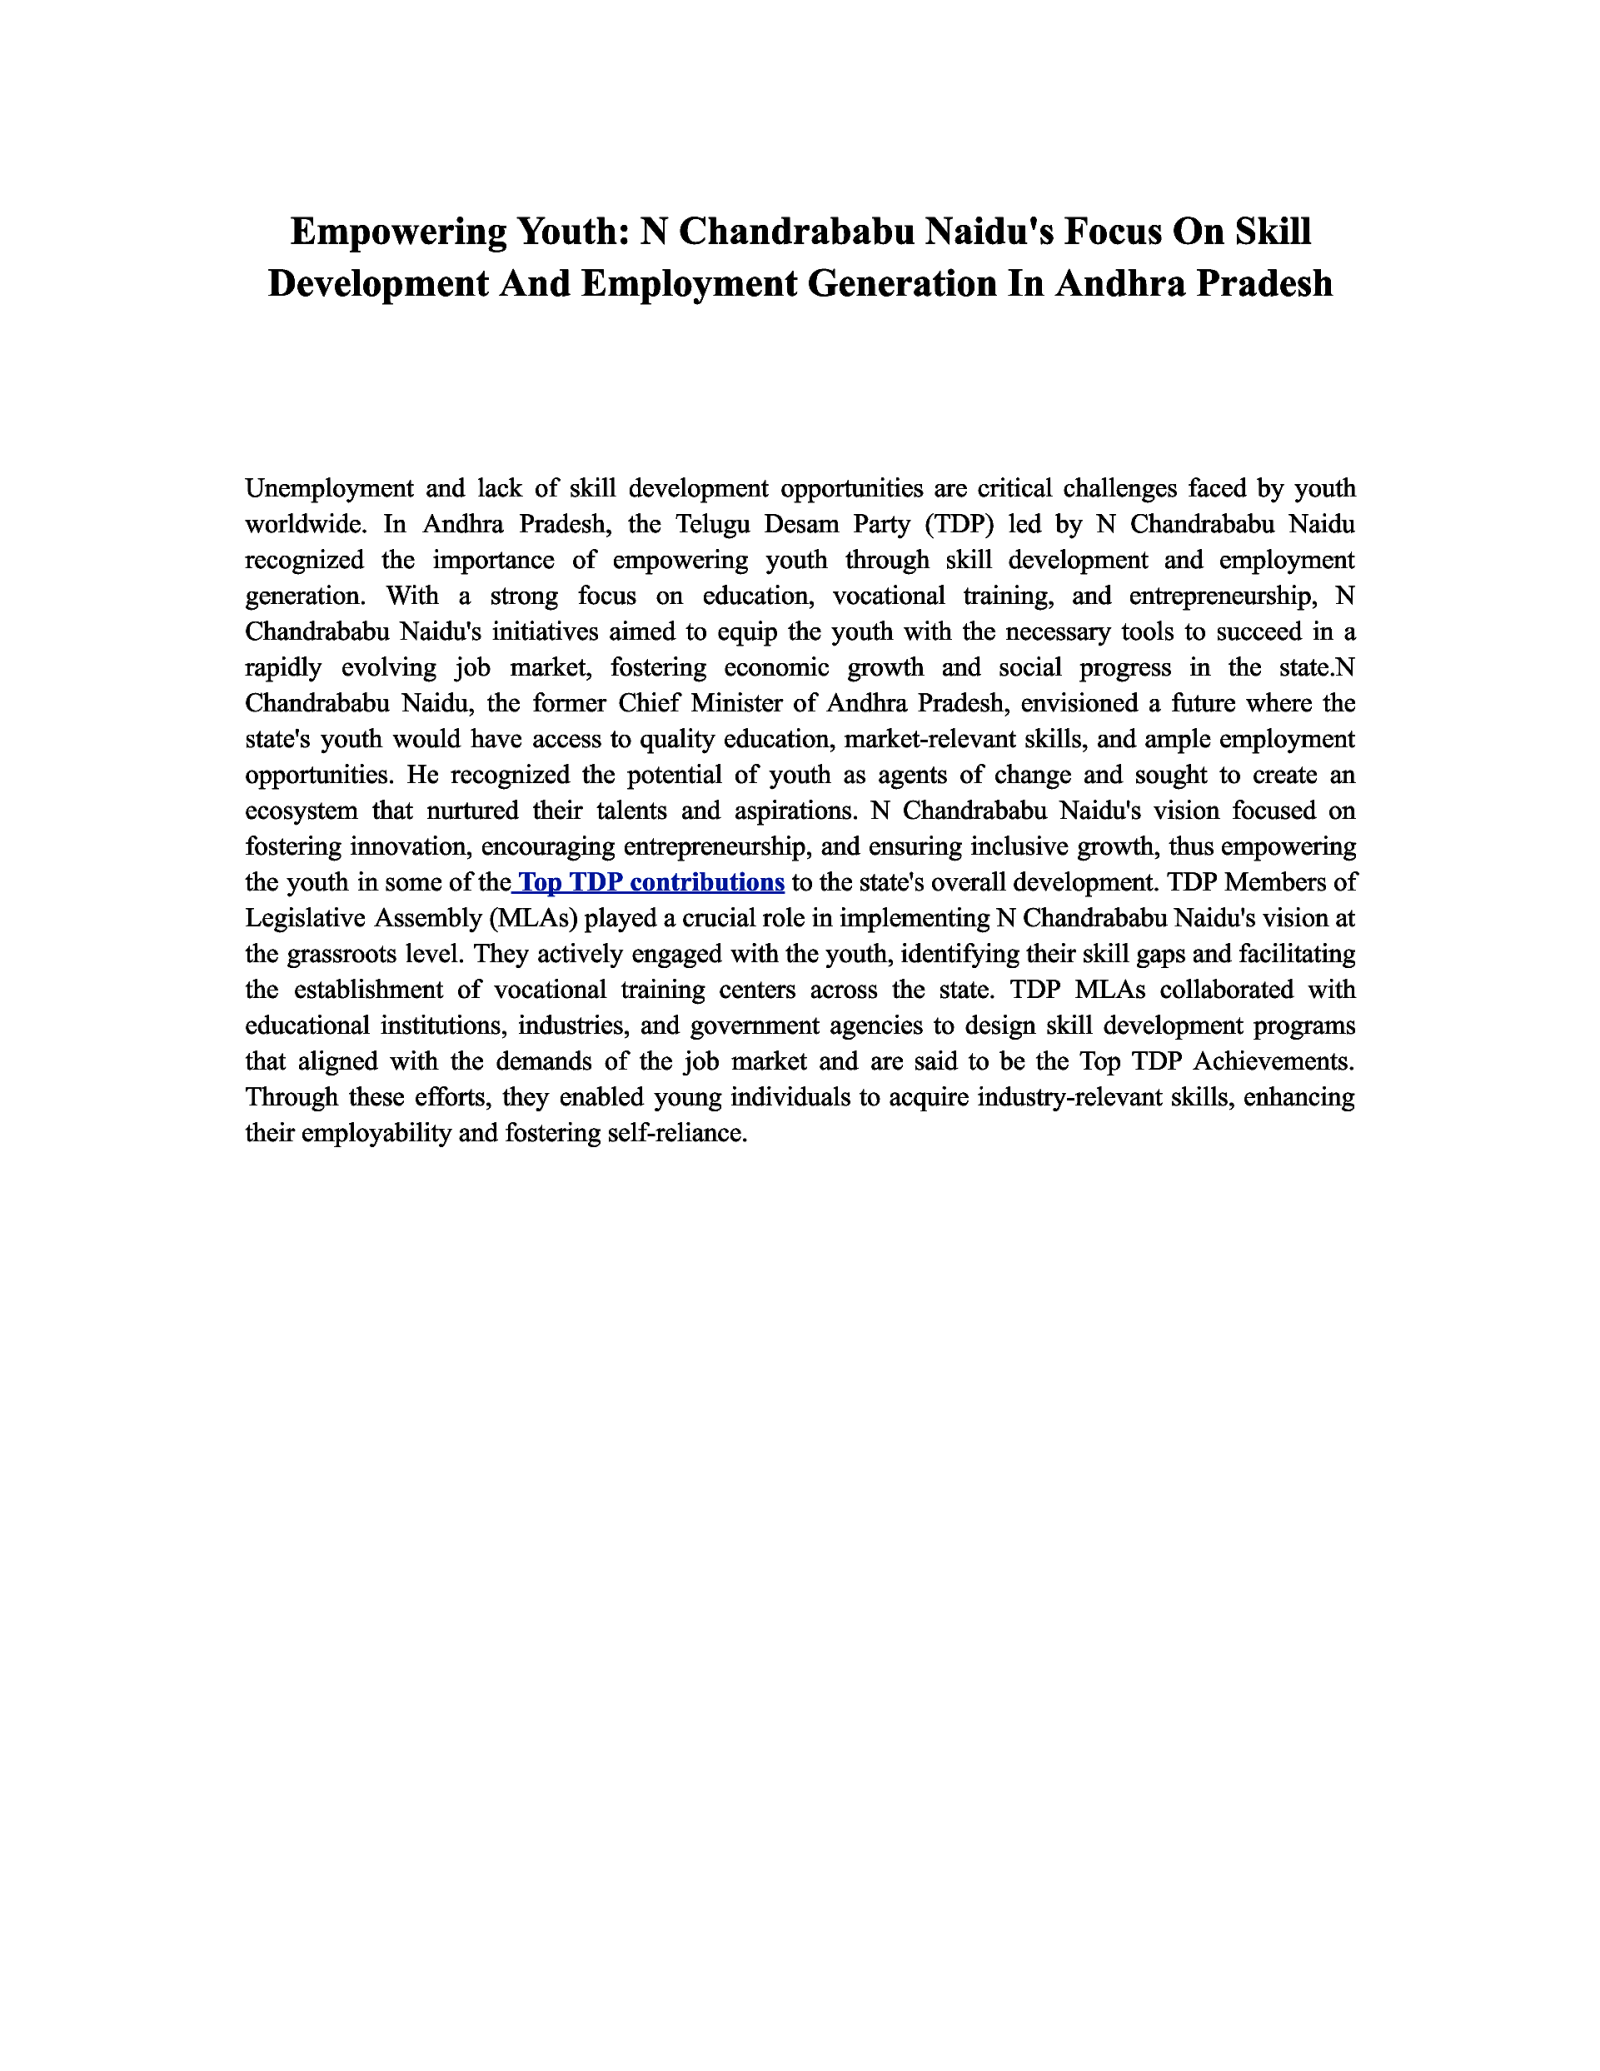 Empowering Youth: N Chandrababu Naidu’s Focus On Skill Development And Employment Generation In Andhra Pradesh